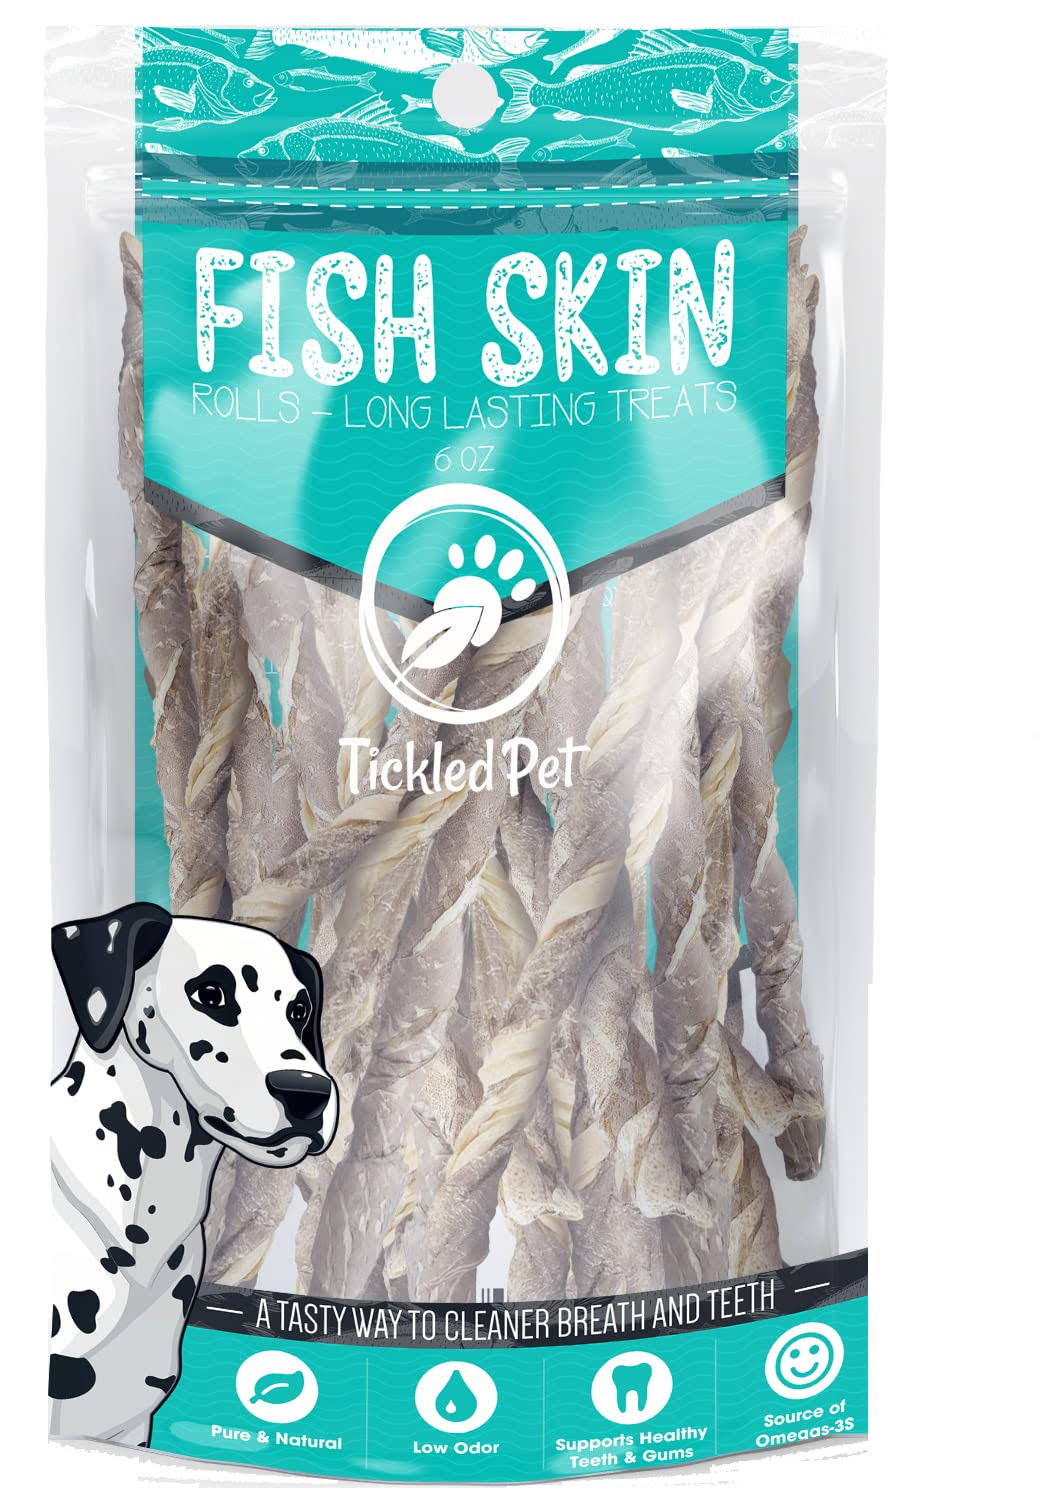 TickledPet 6 oz Icelandic Cod Skin Rolls